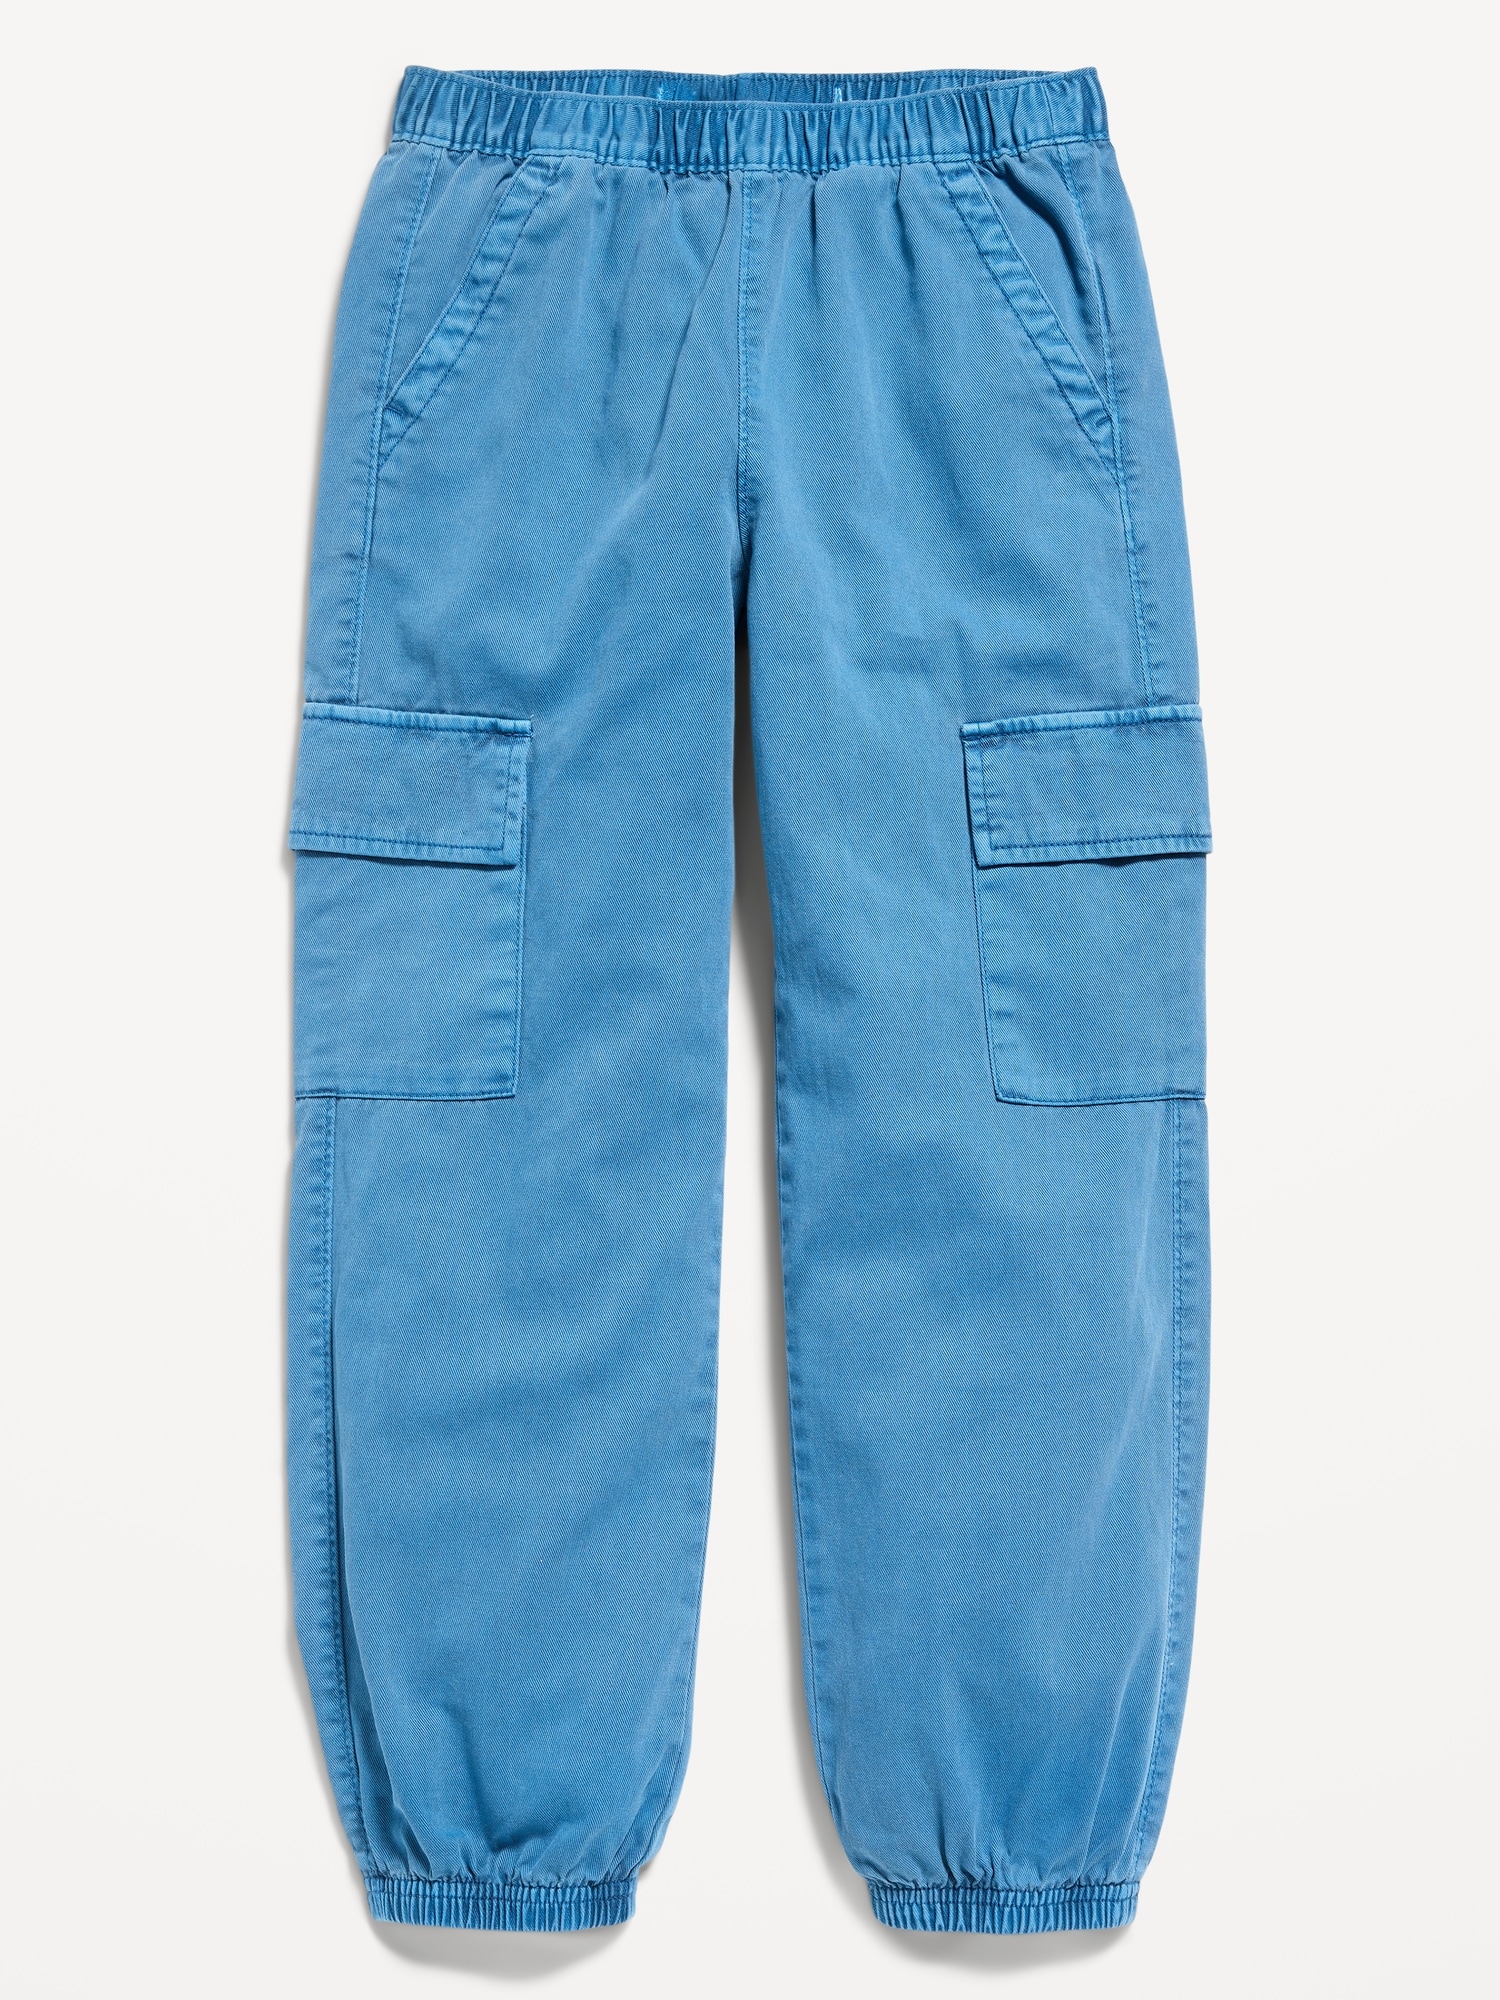 Girls Pants With Pockets Denim Trousers Streetwear Jeans Pants Casual Loose  | eBay